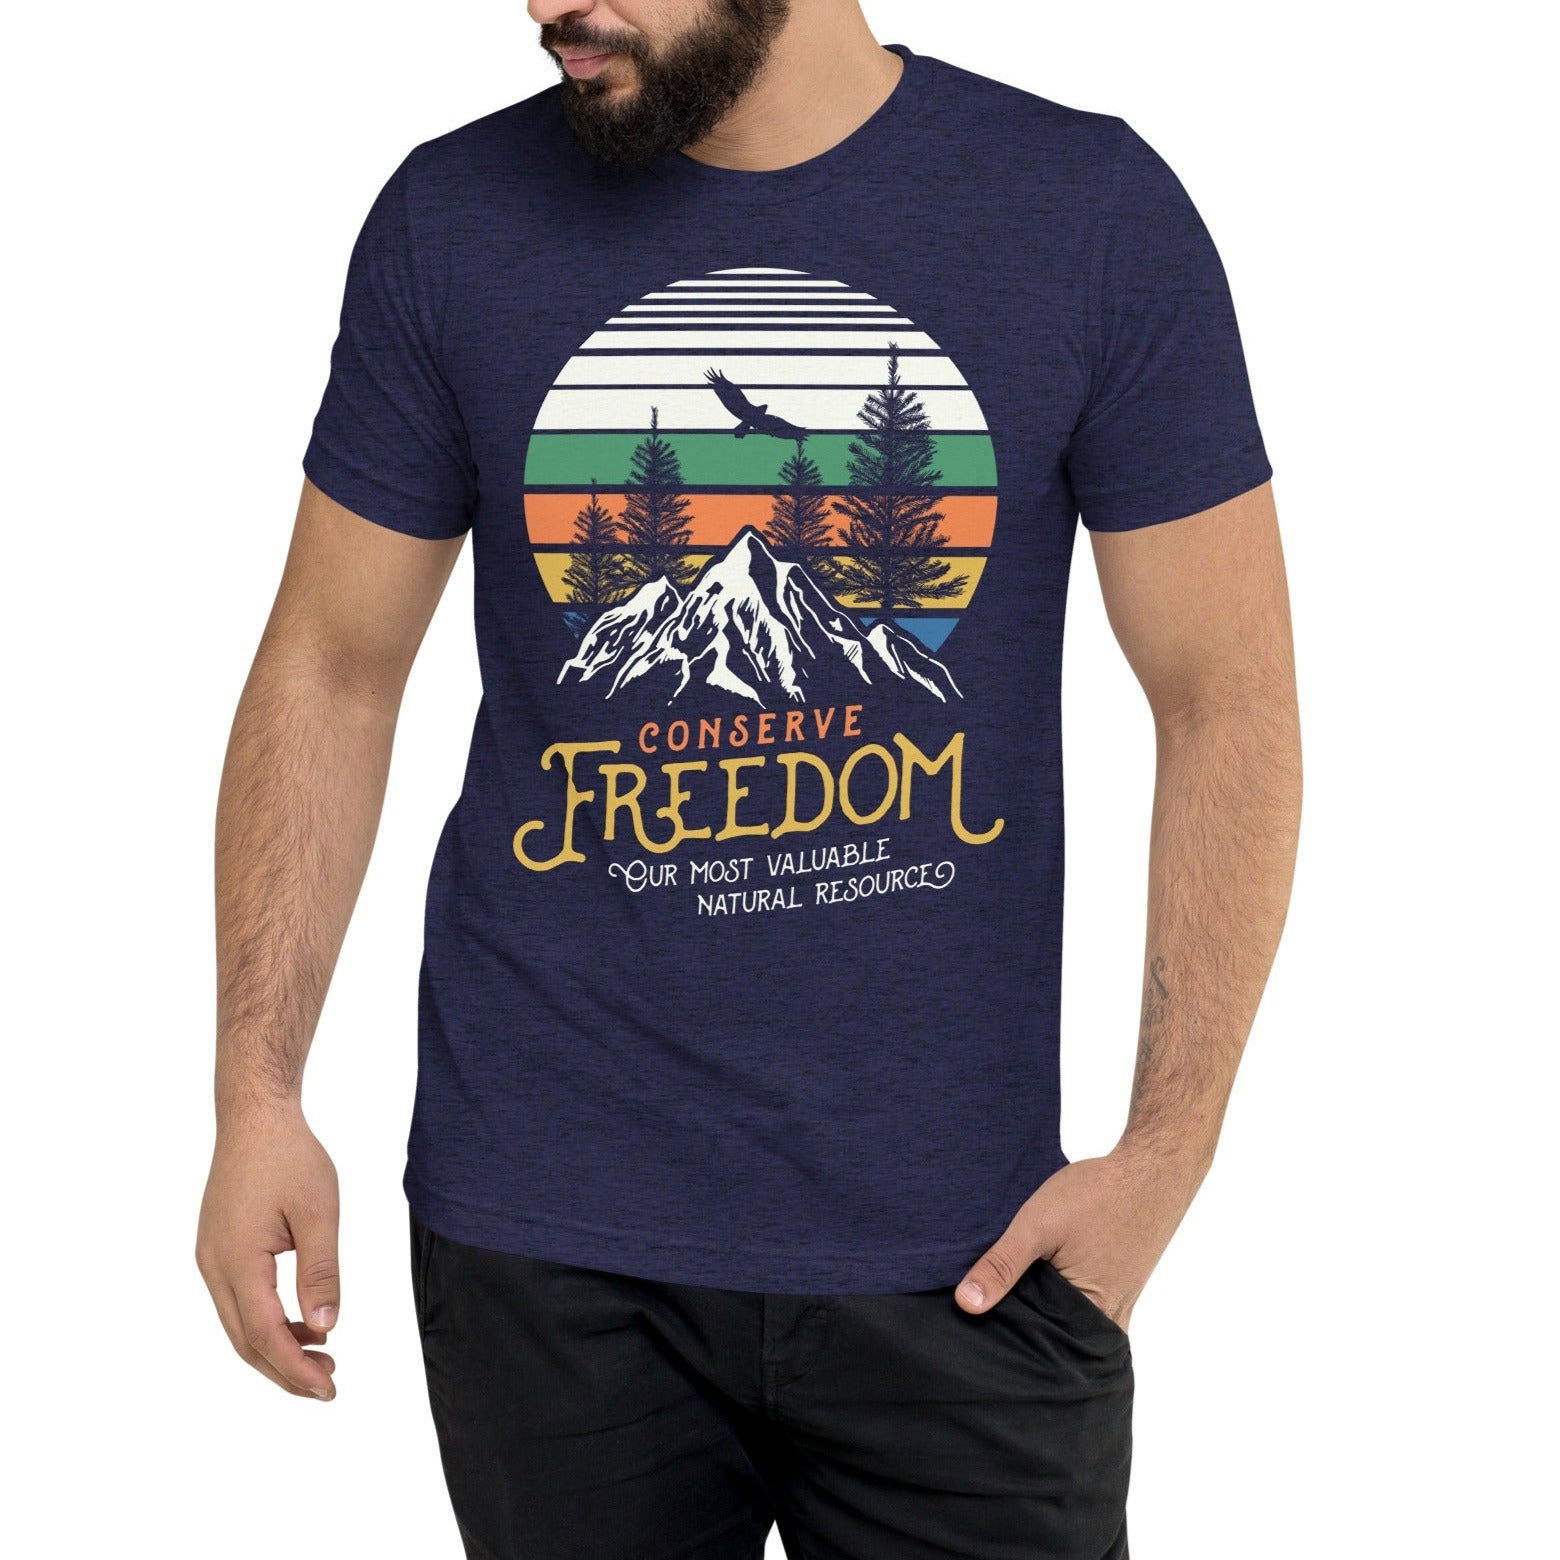 Conserve Freedom Tri-blend Shirt